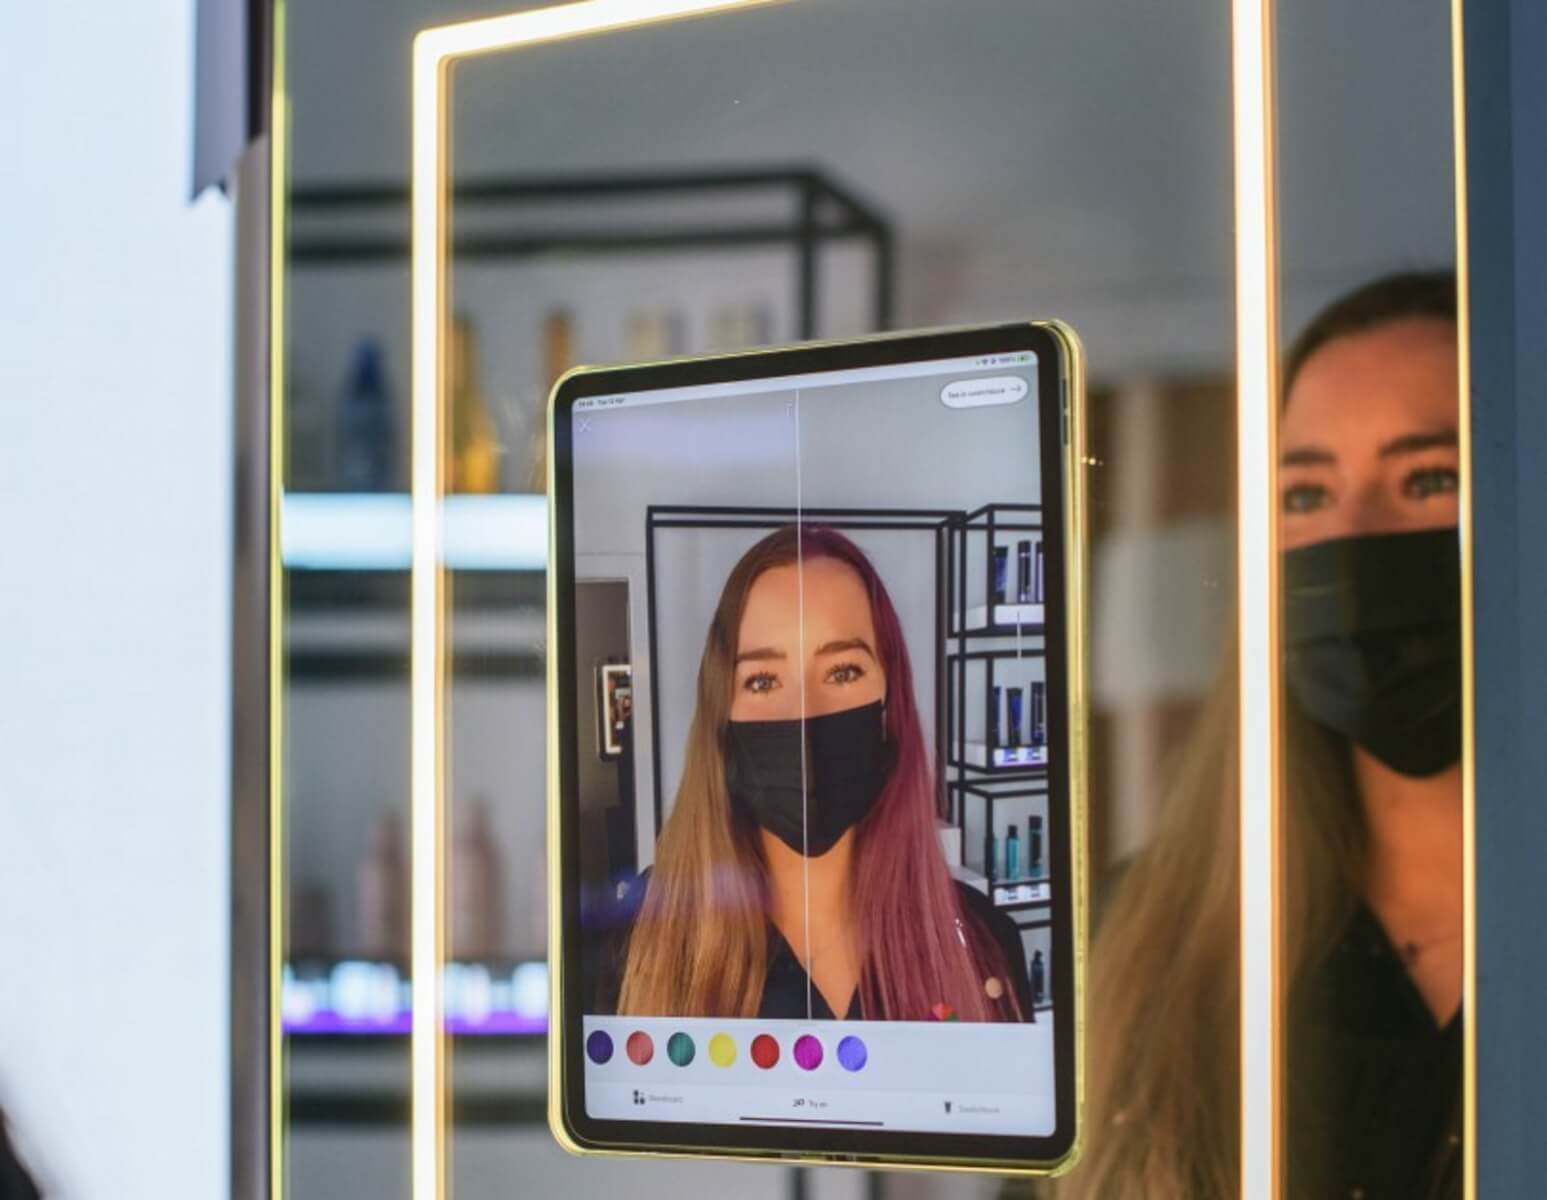 amazon salon augmented reality london